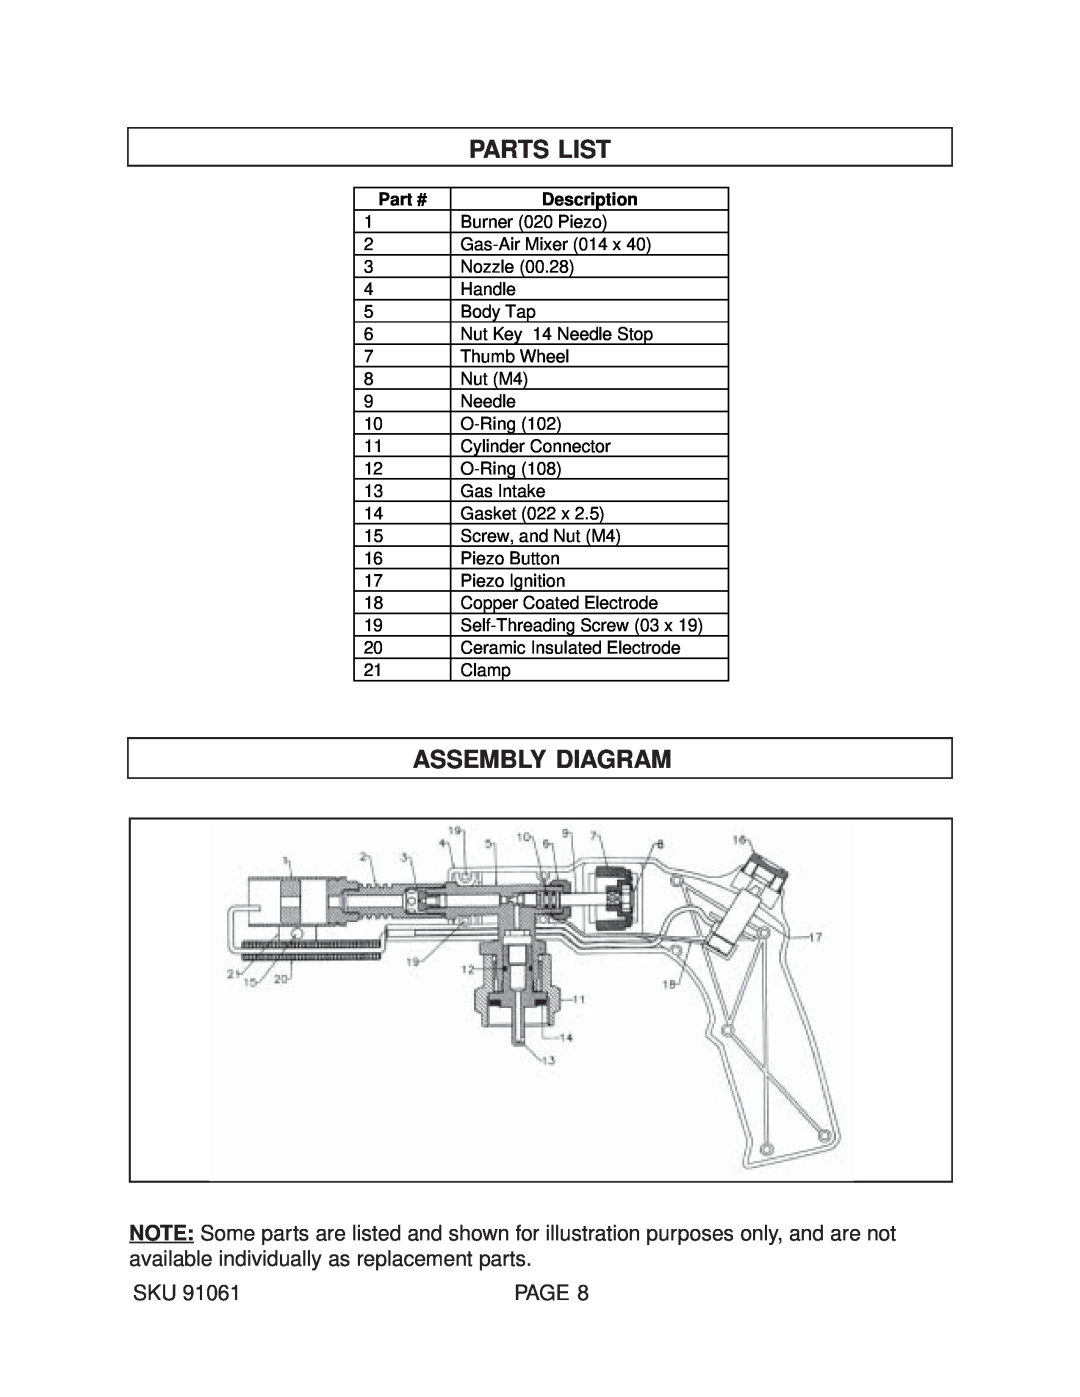 Harbor Freight Tools 91061 operating instructions Parts List, Assembly Diagram, Description 